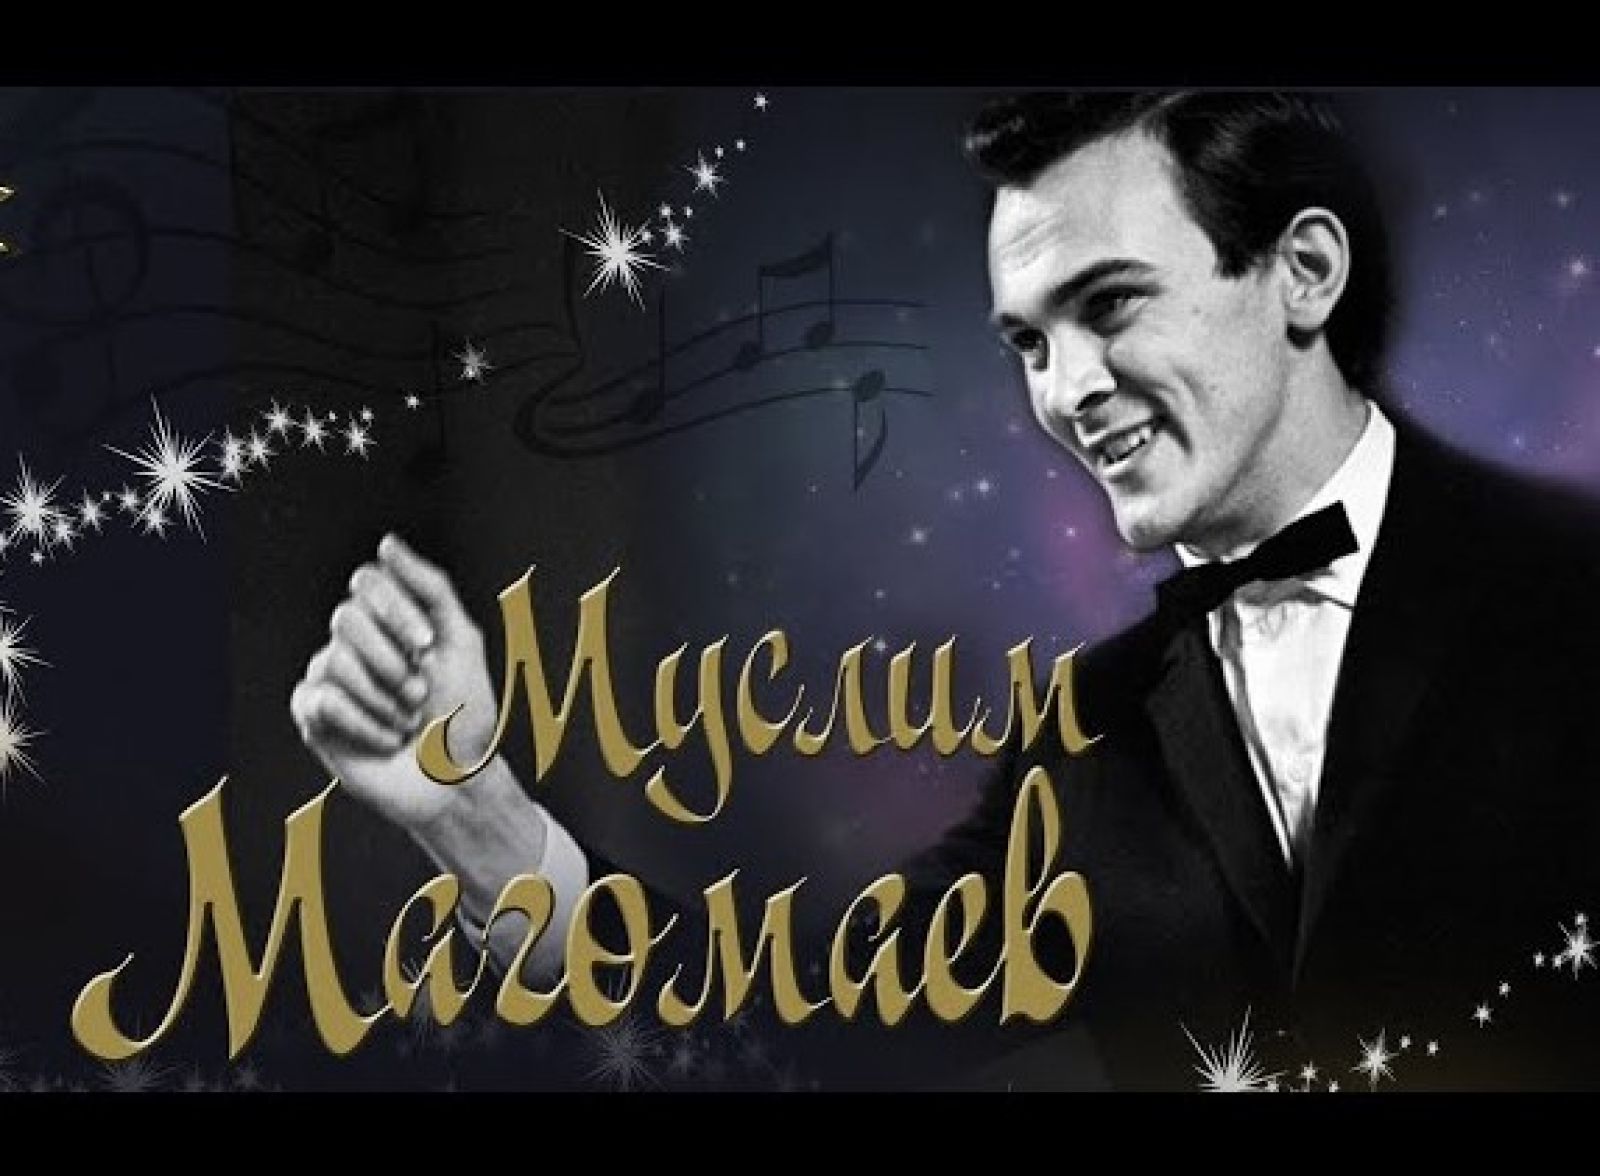 Спел муслима магомаева. Магомаев 2008. Магомаев 1973.